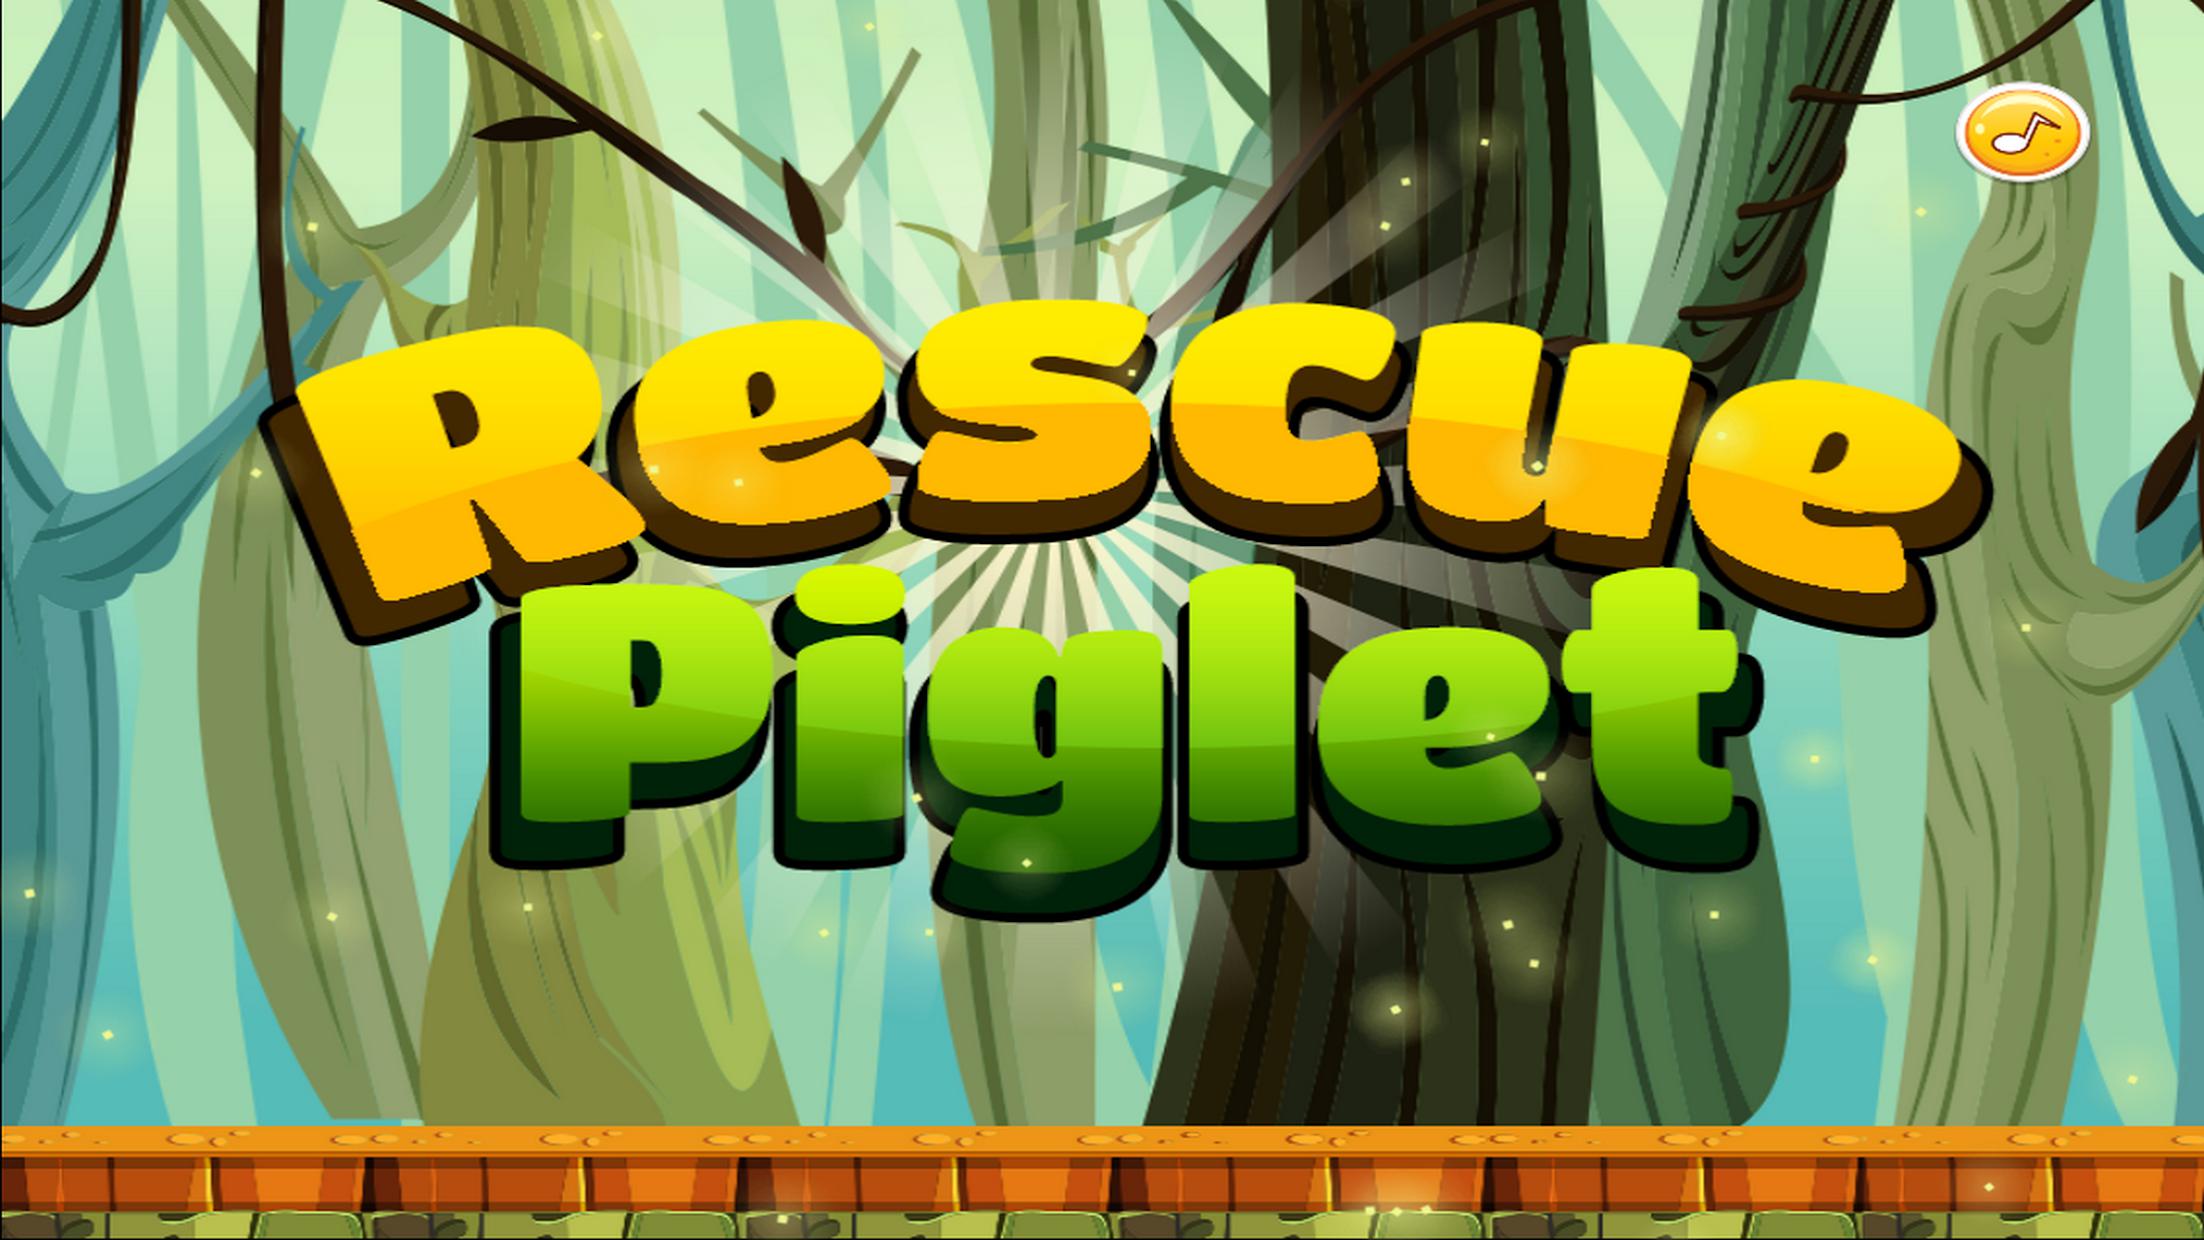 Rescue Piglet